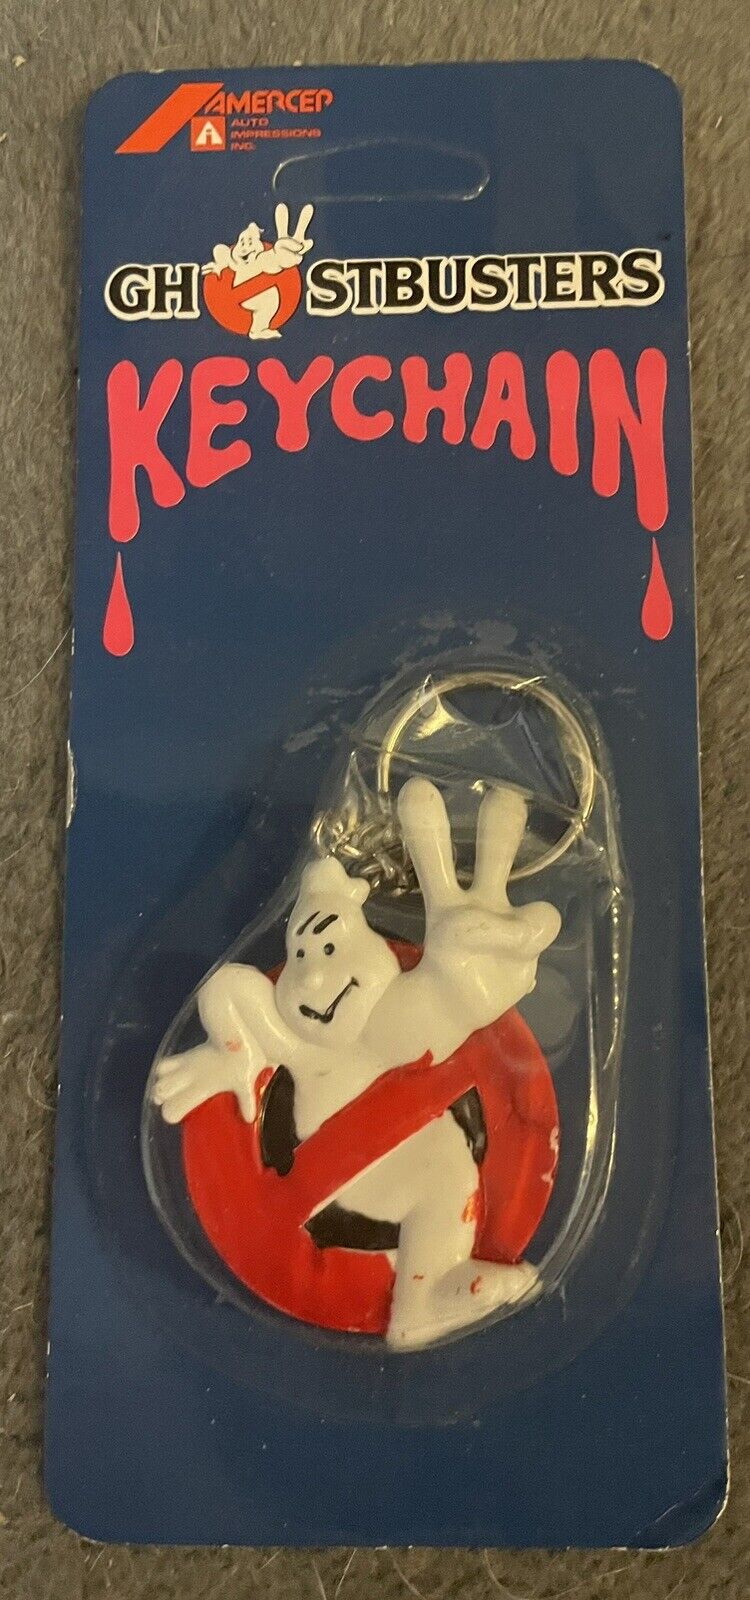 Ghostbusters Keychain Amercep Vintage 1989 Sealed Movie Memorabilia 2”x2 1/2